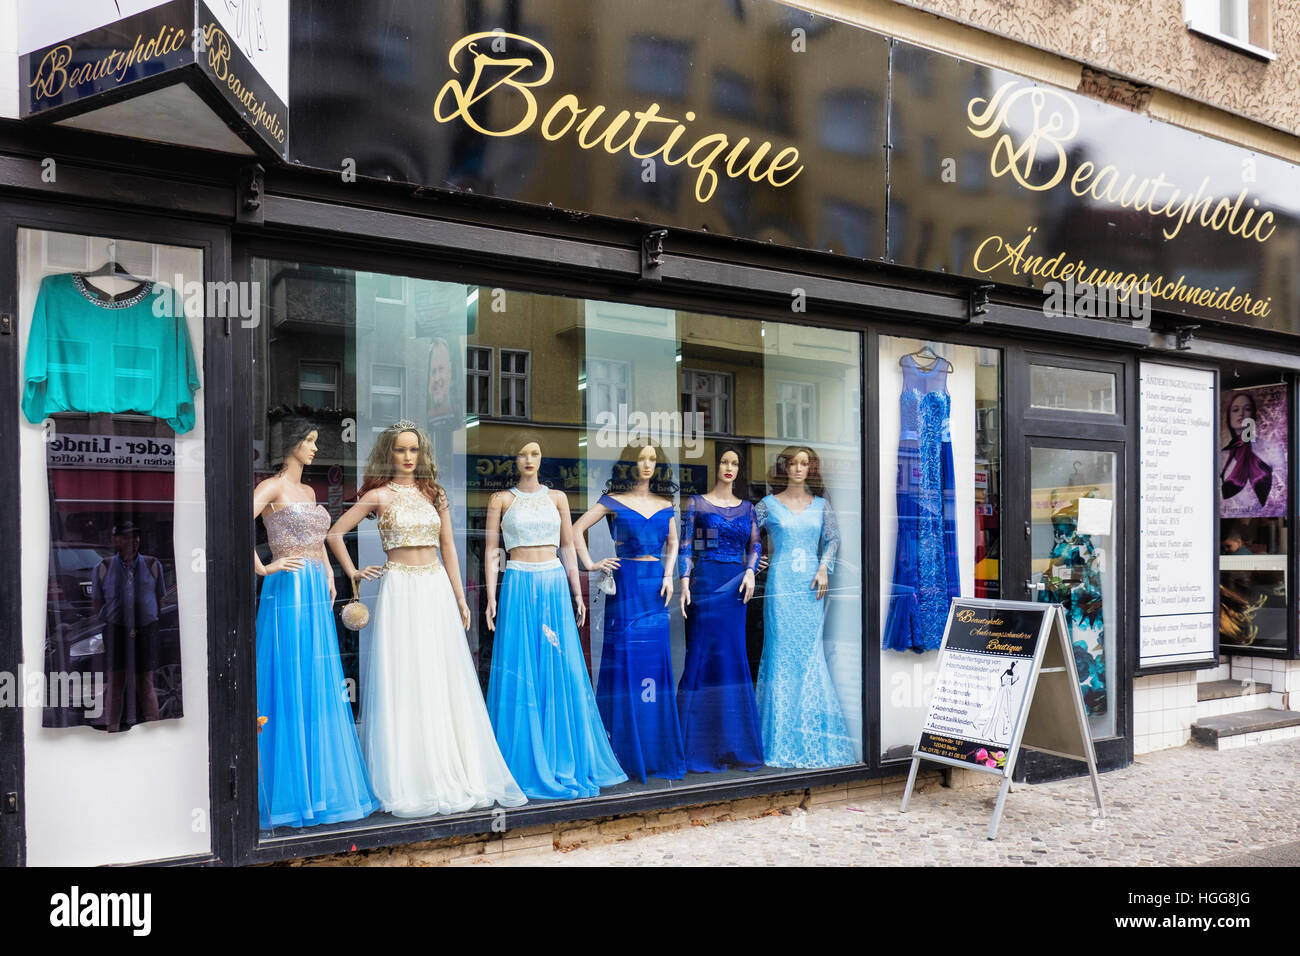 Berlin Neukölln, Karl Marx Strasse. Beautyholic Boutique clothing shop selling evening wear and dresses. Stock Photo